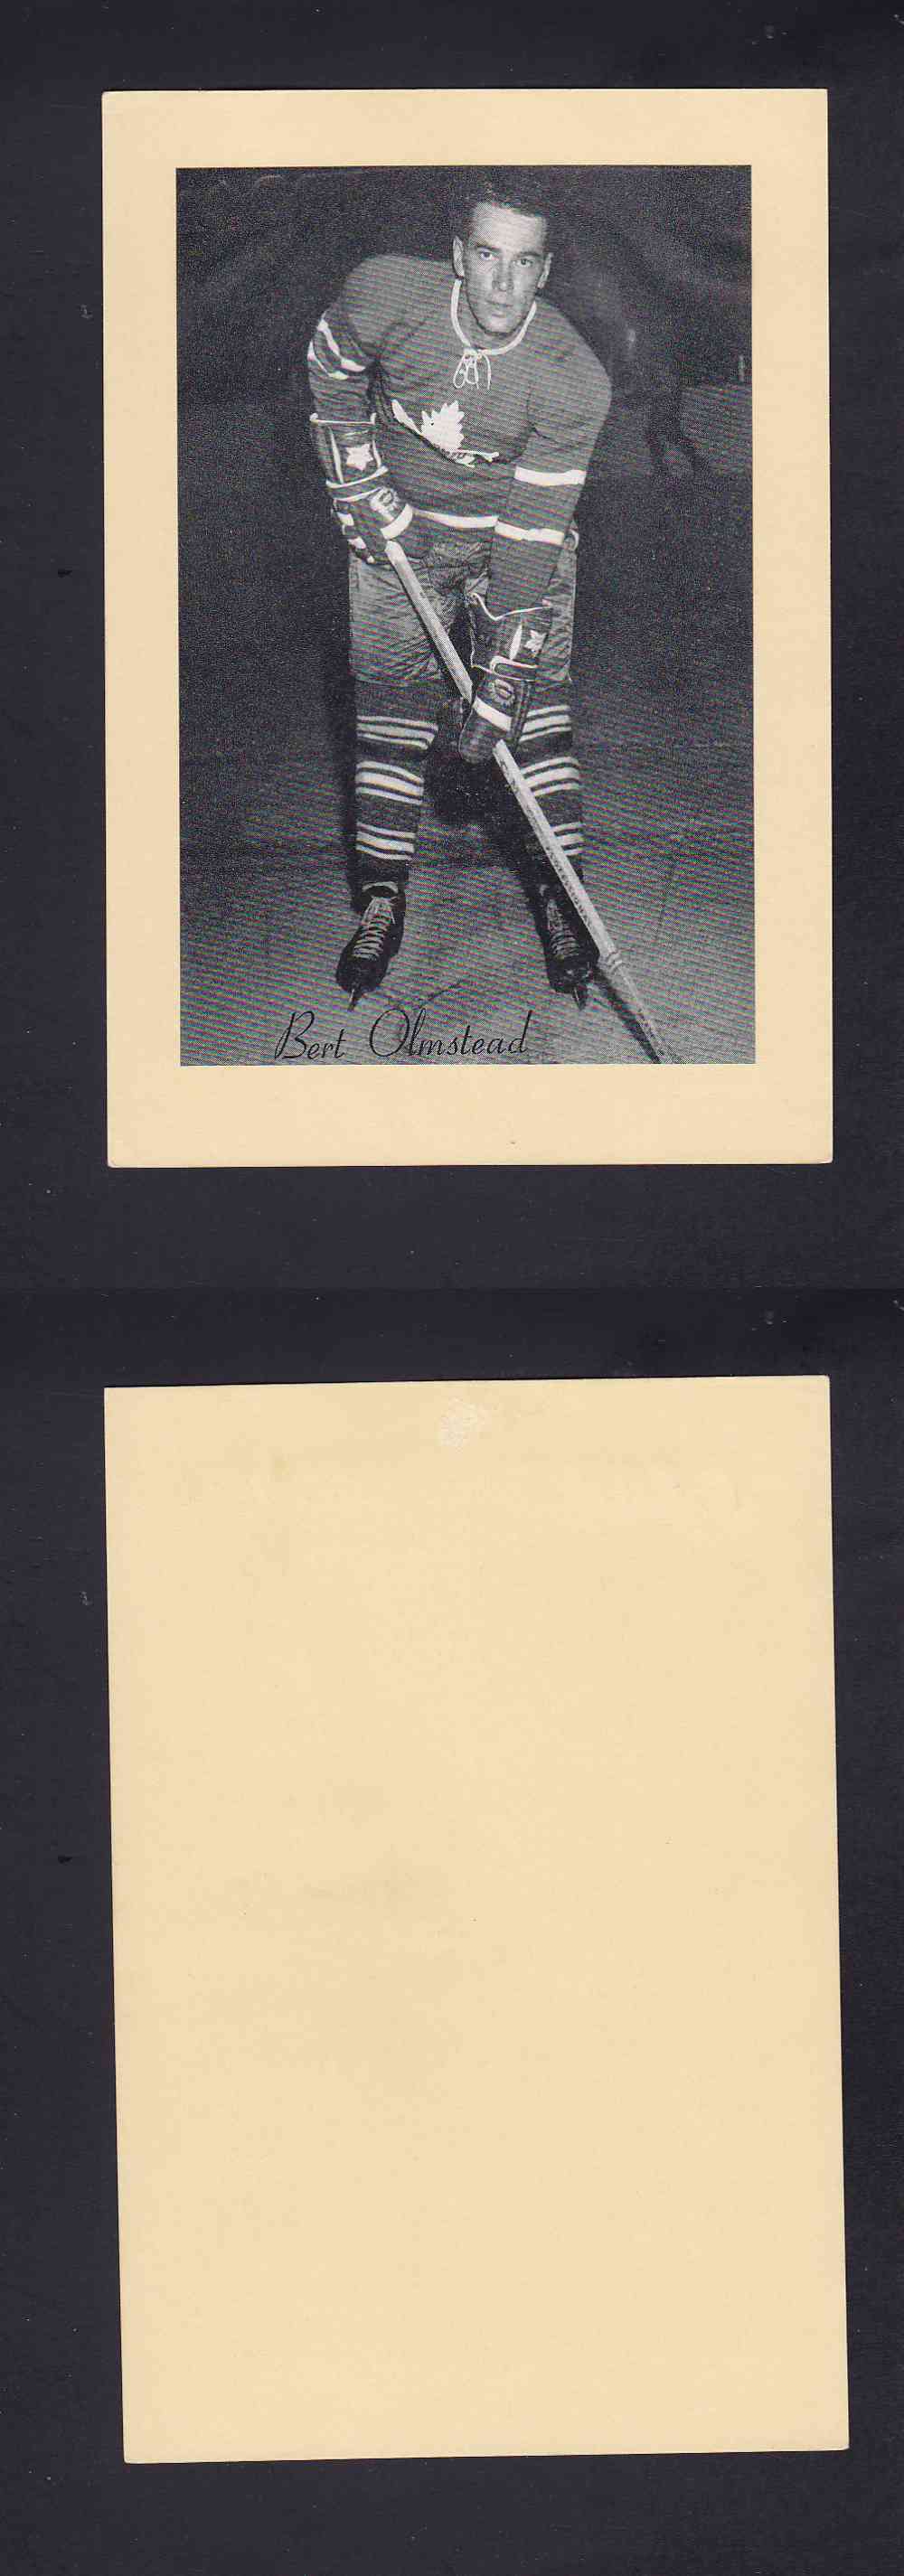 1945-64 BEEHIVE PHOTO GR.2 B. OLMSTEAD photo